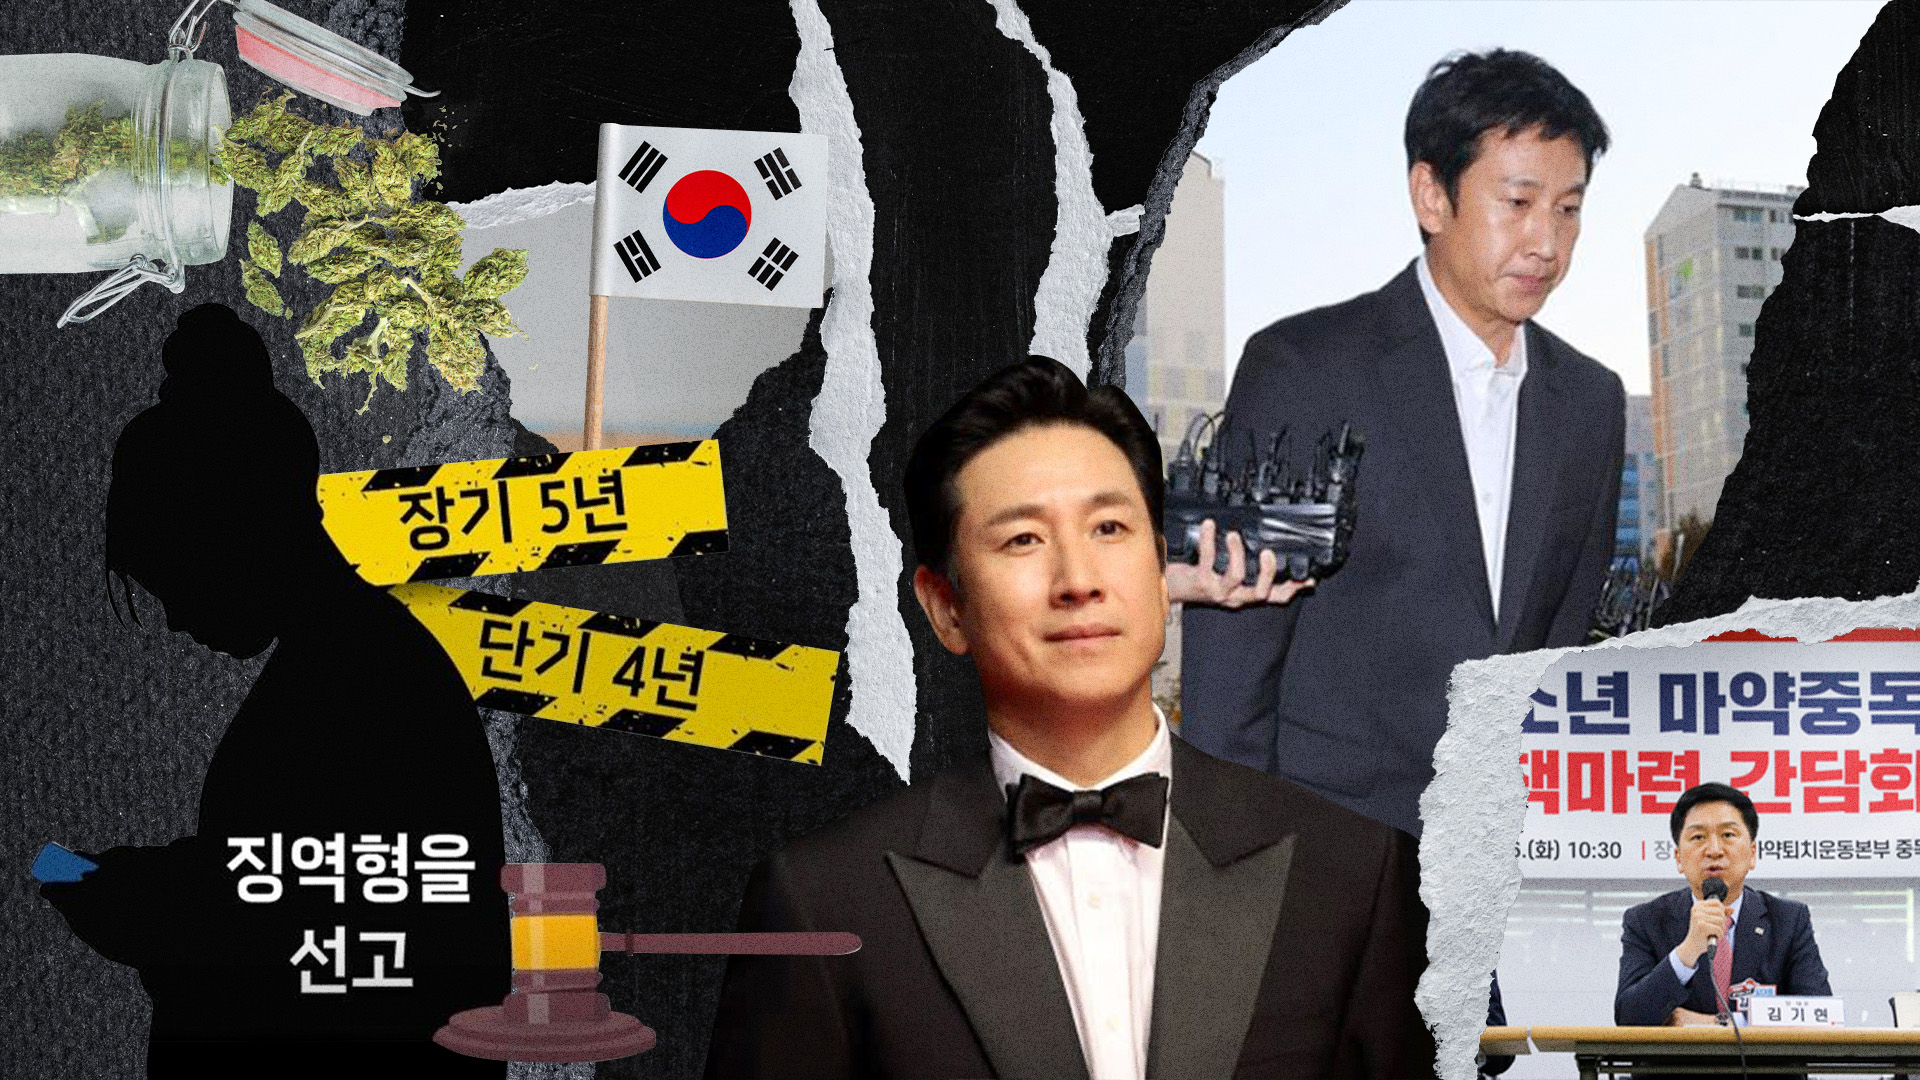 Death of “Parasite” Actor Puts Spotlight on S. Korea’s Anti-Drug Culture